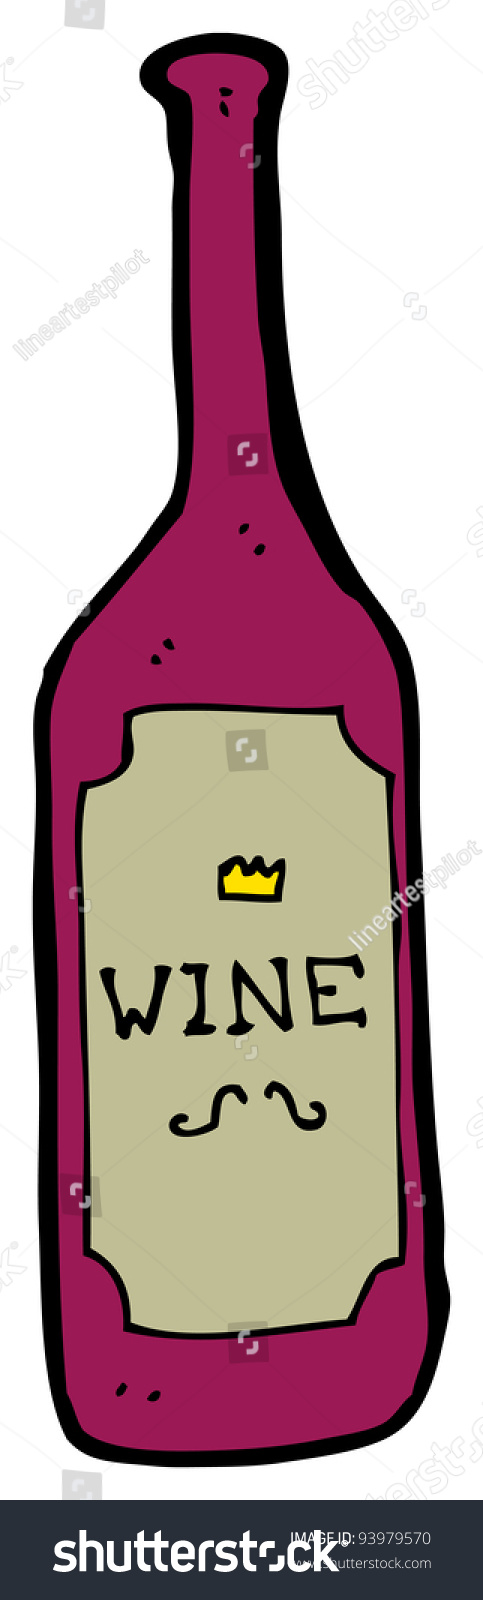 Cartoon Wine Bottle Raster Version Stock Illustration 93979570